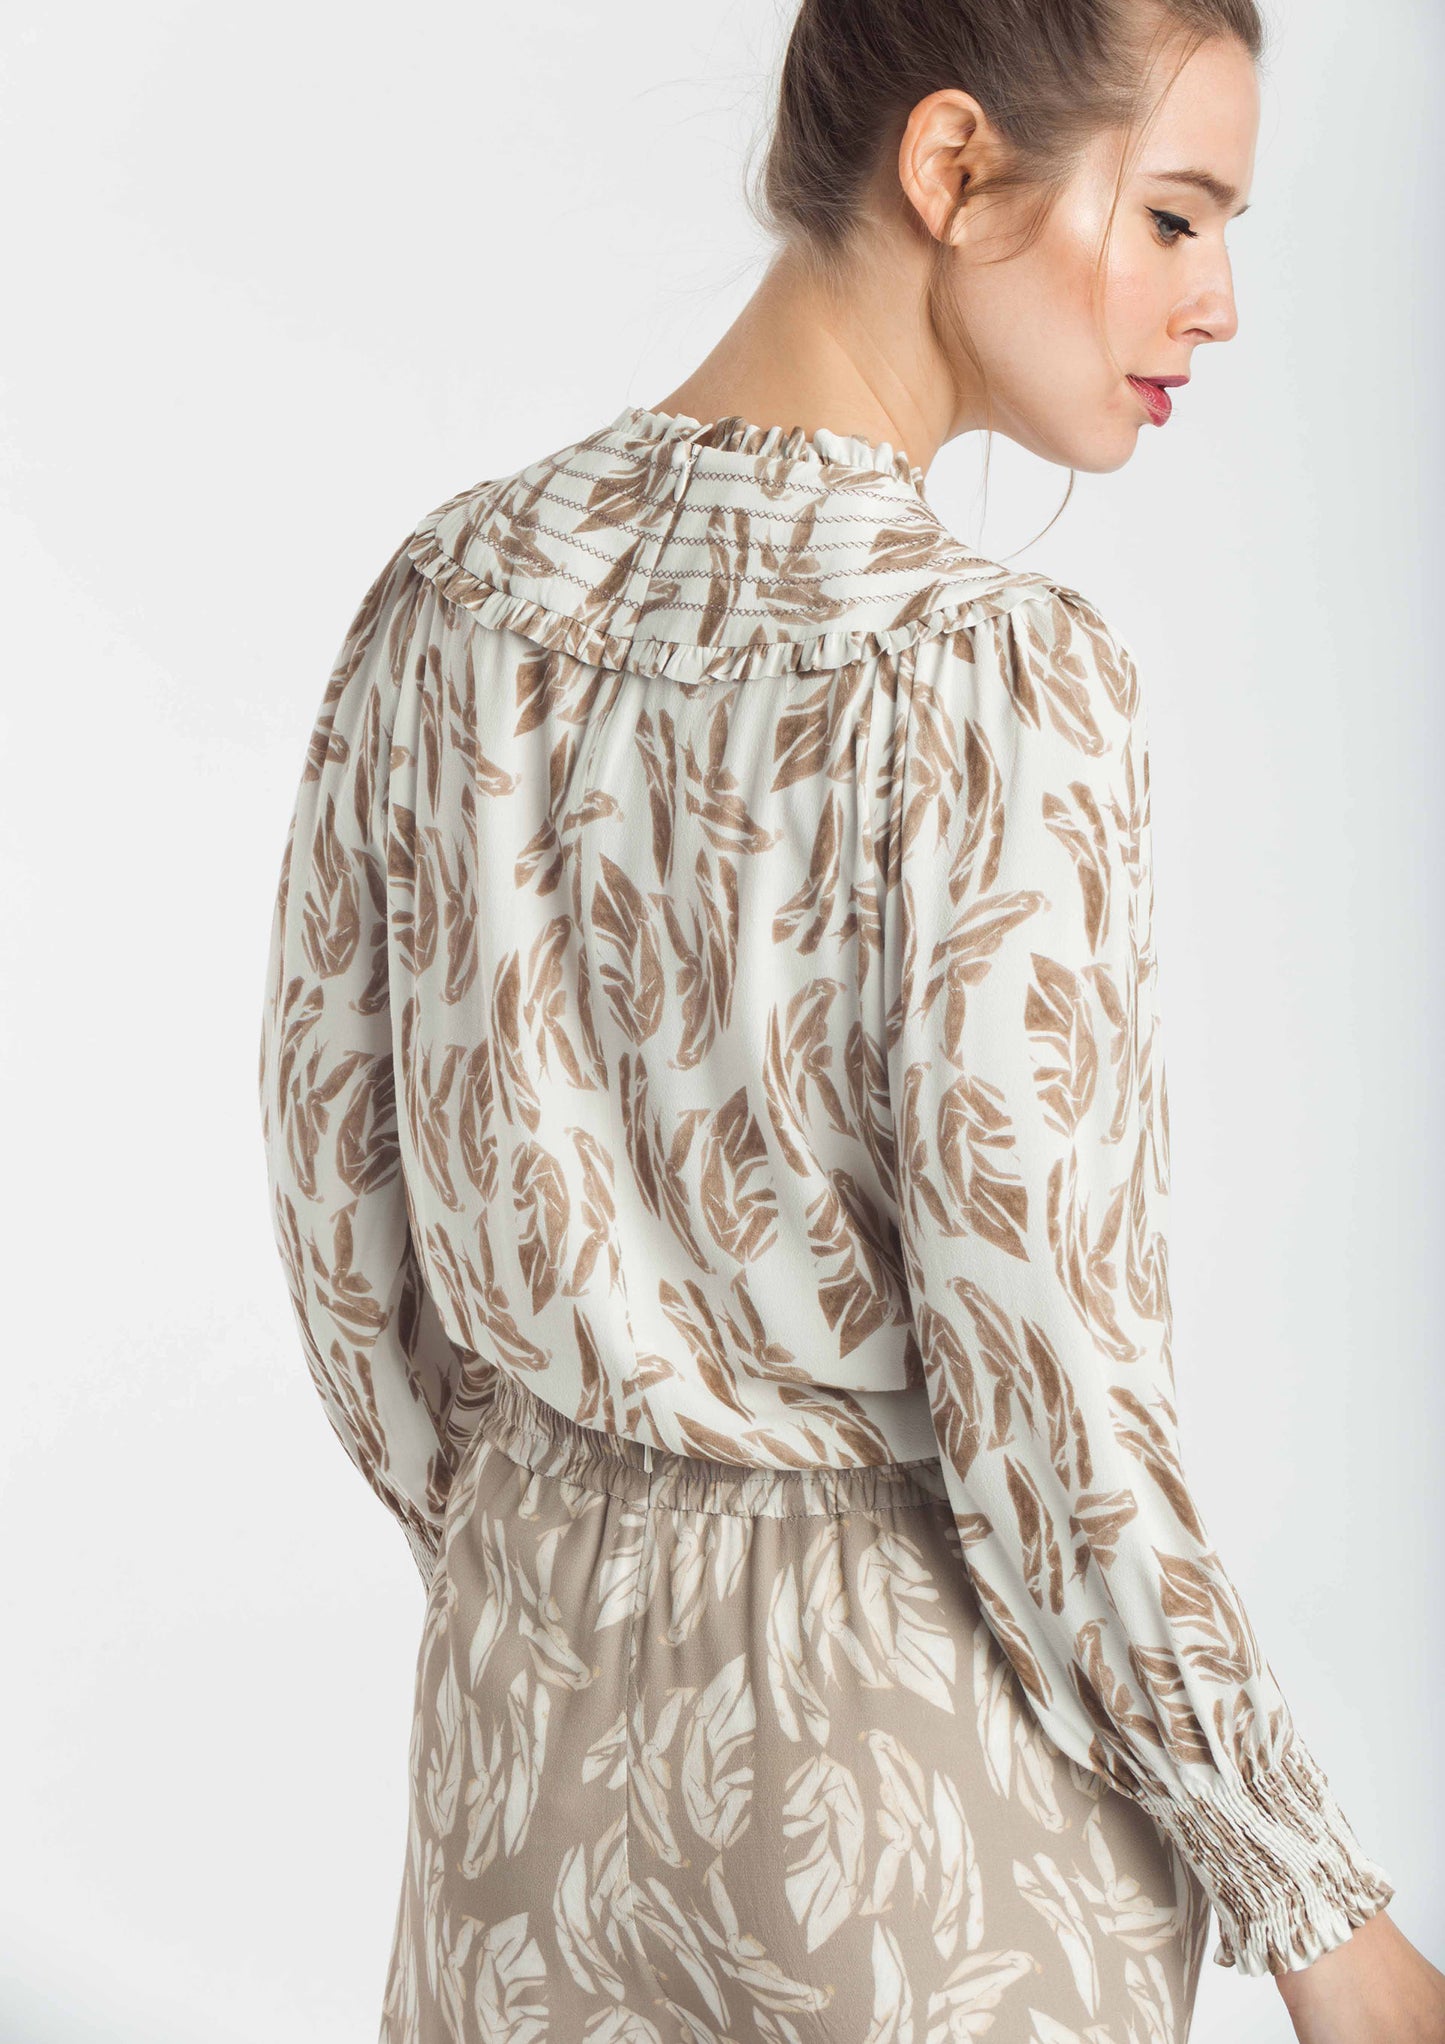 Leaf print blouse with elastic neckline